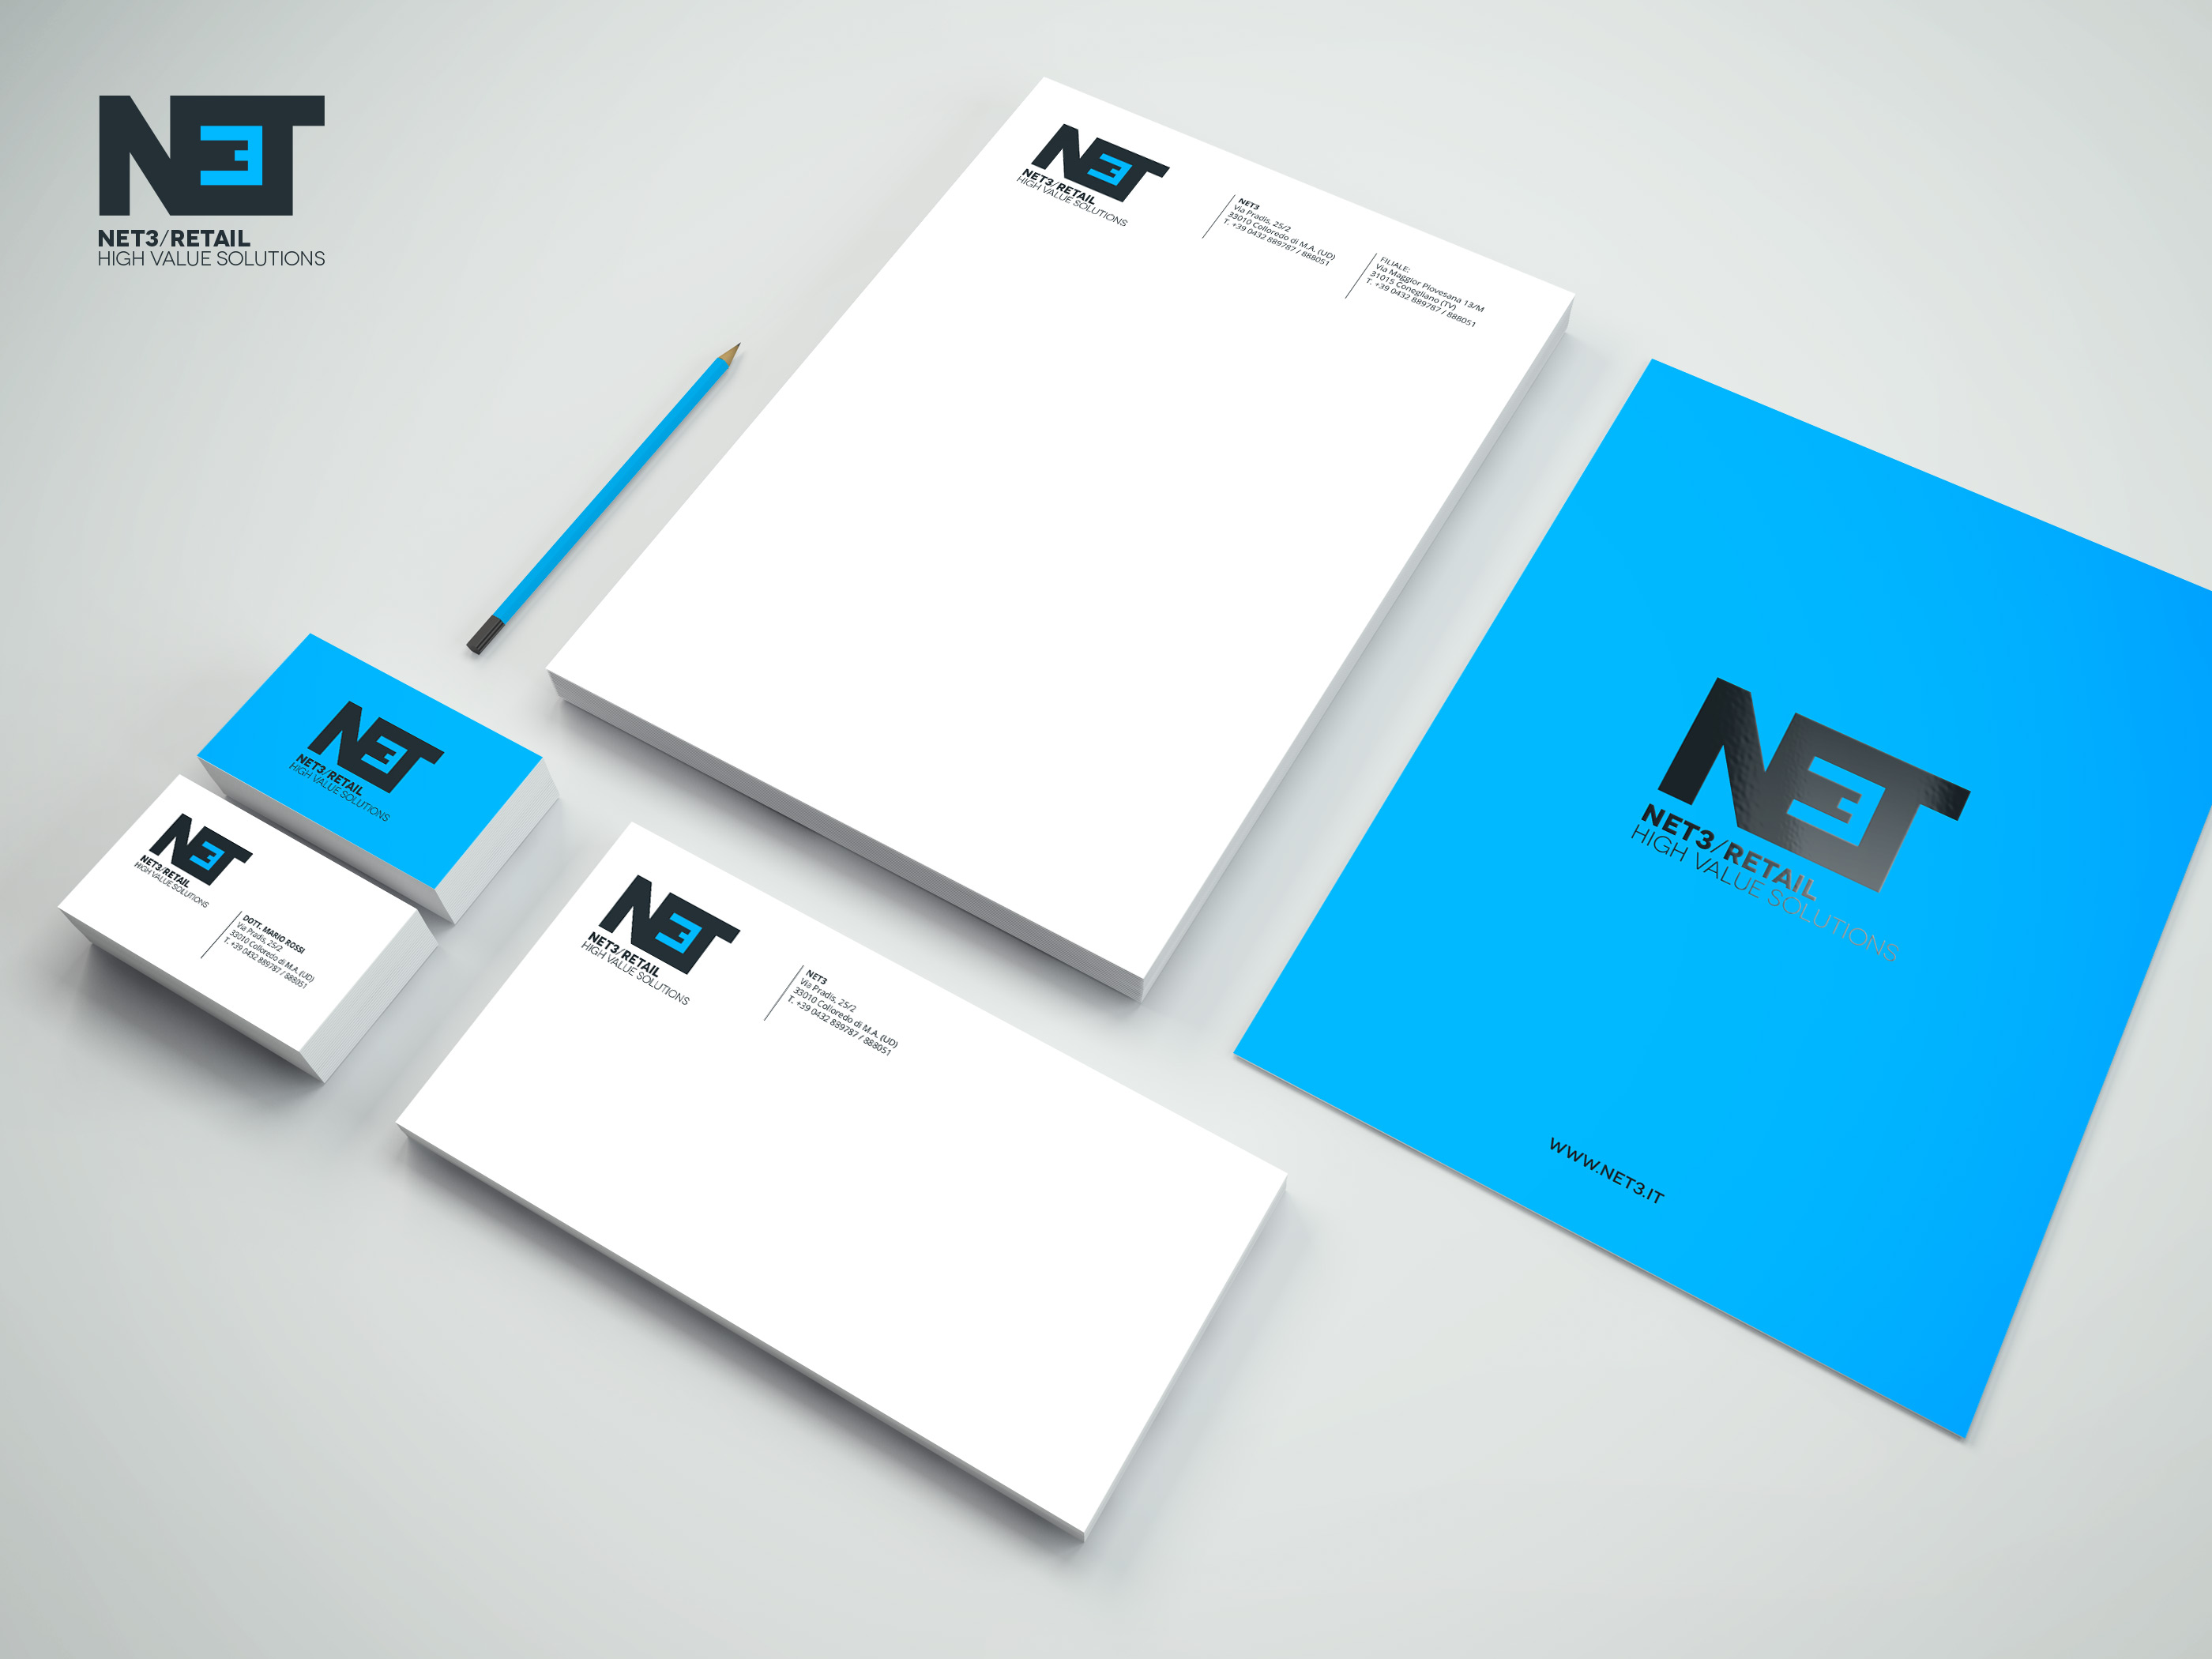 Progetto Net3 Retail